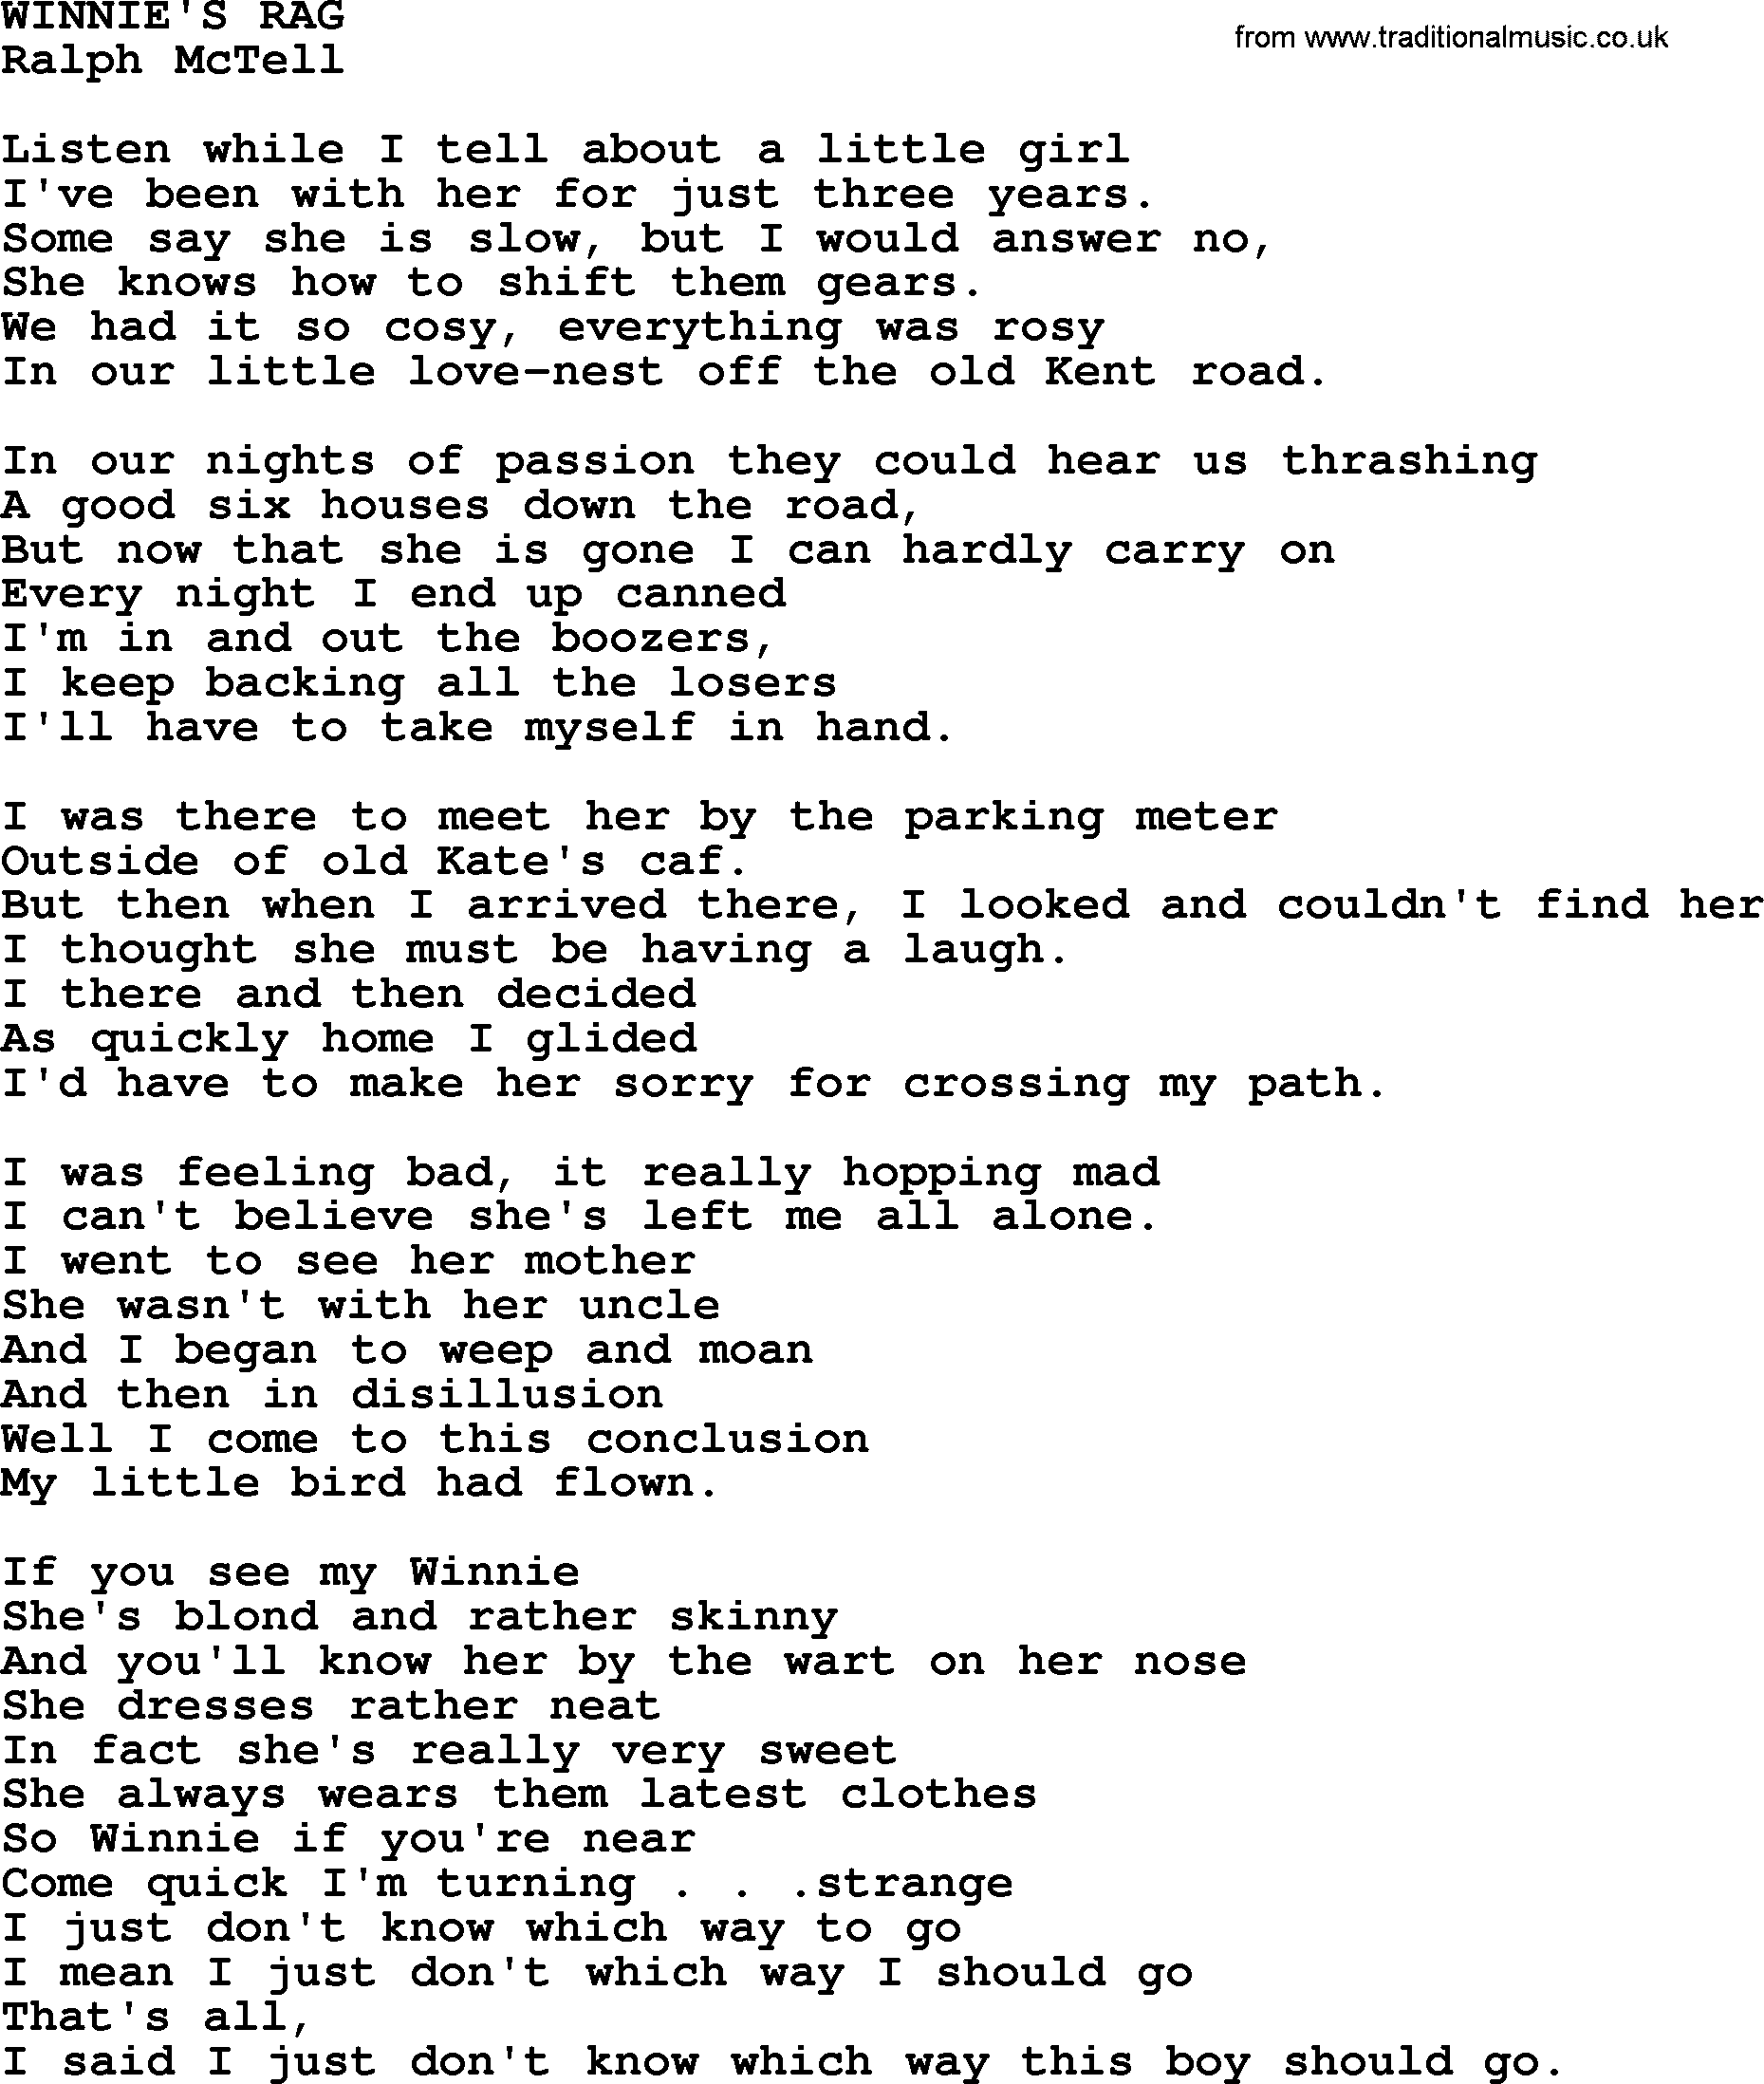 Ralph McTell Song: Winnie's Rag, lyrics